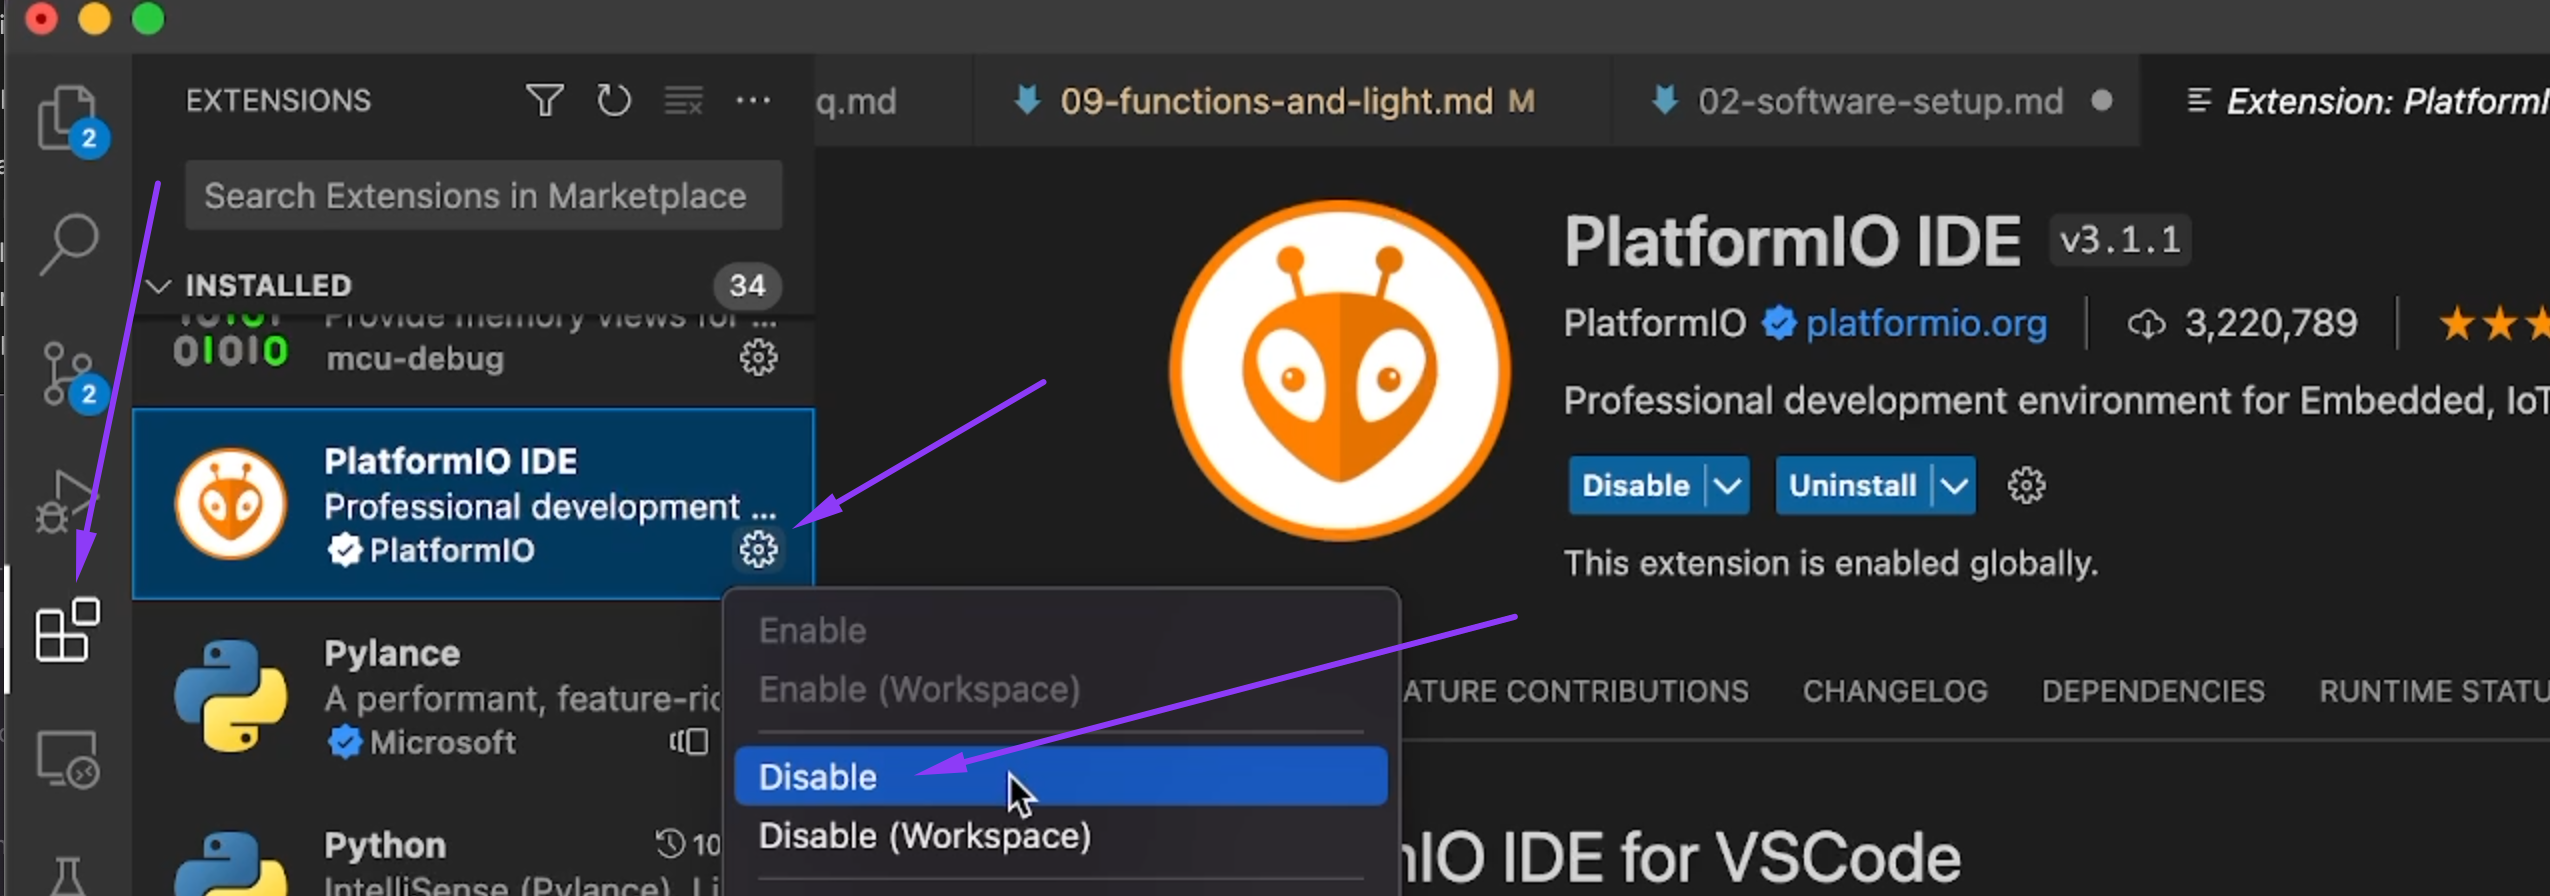 PlatformIO IDE Extension